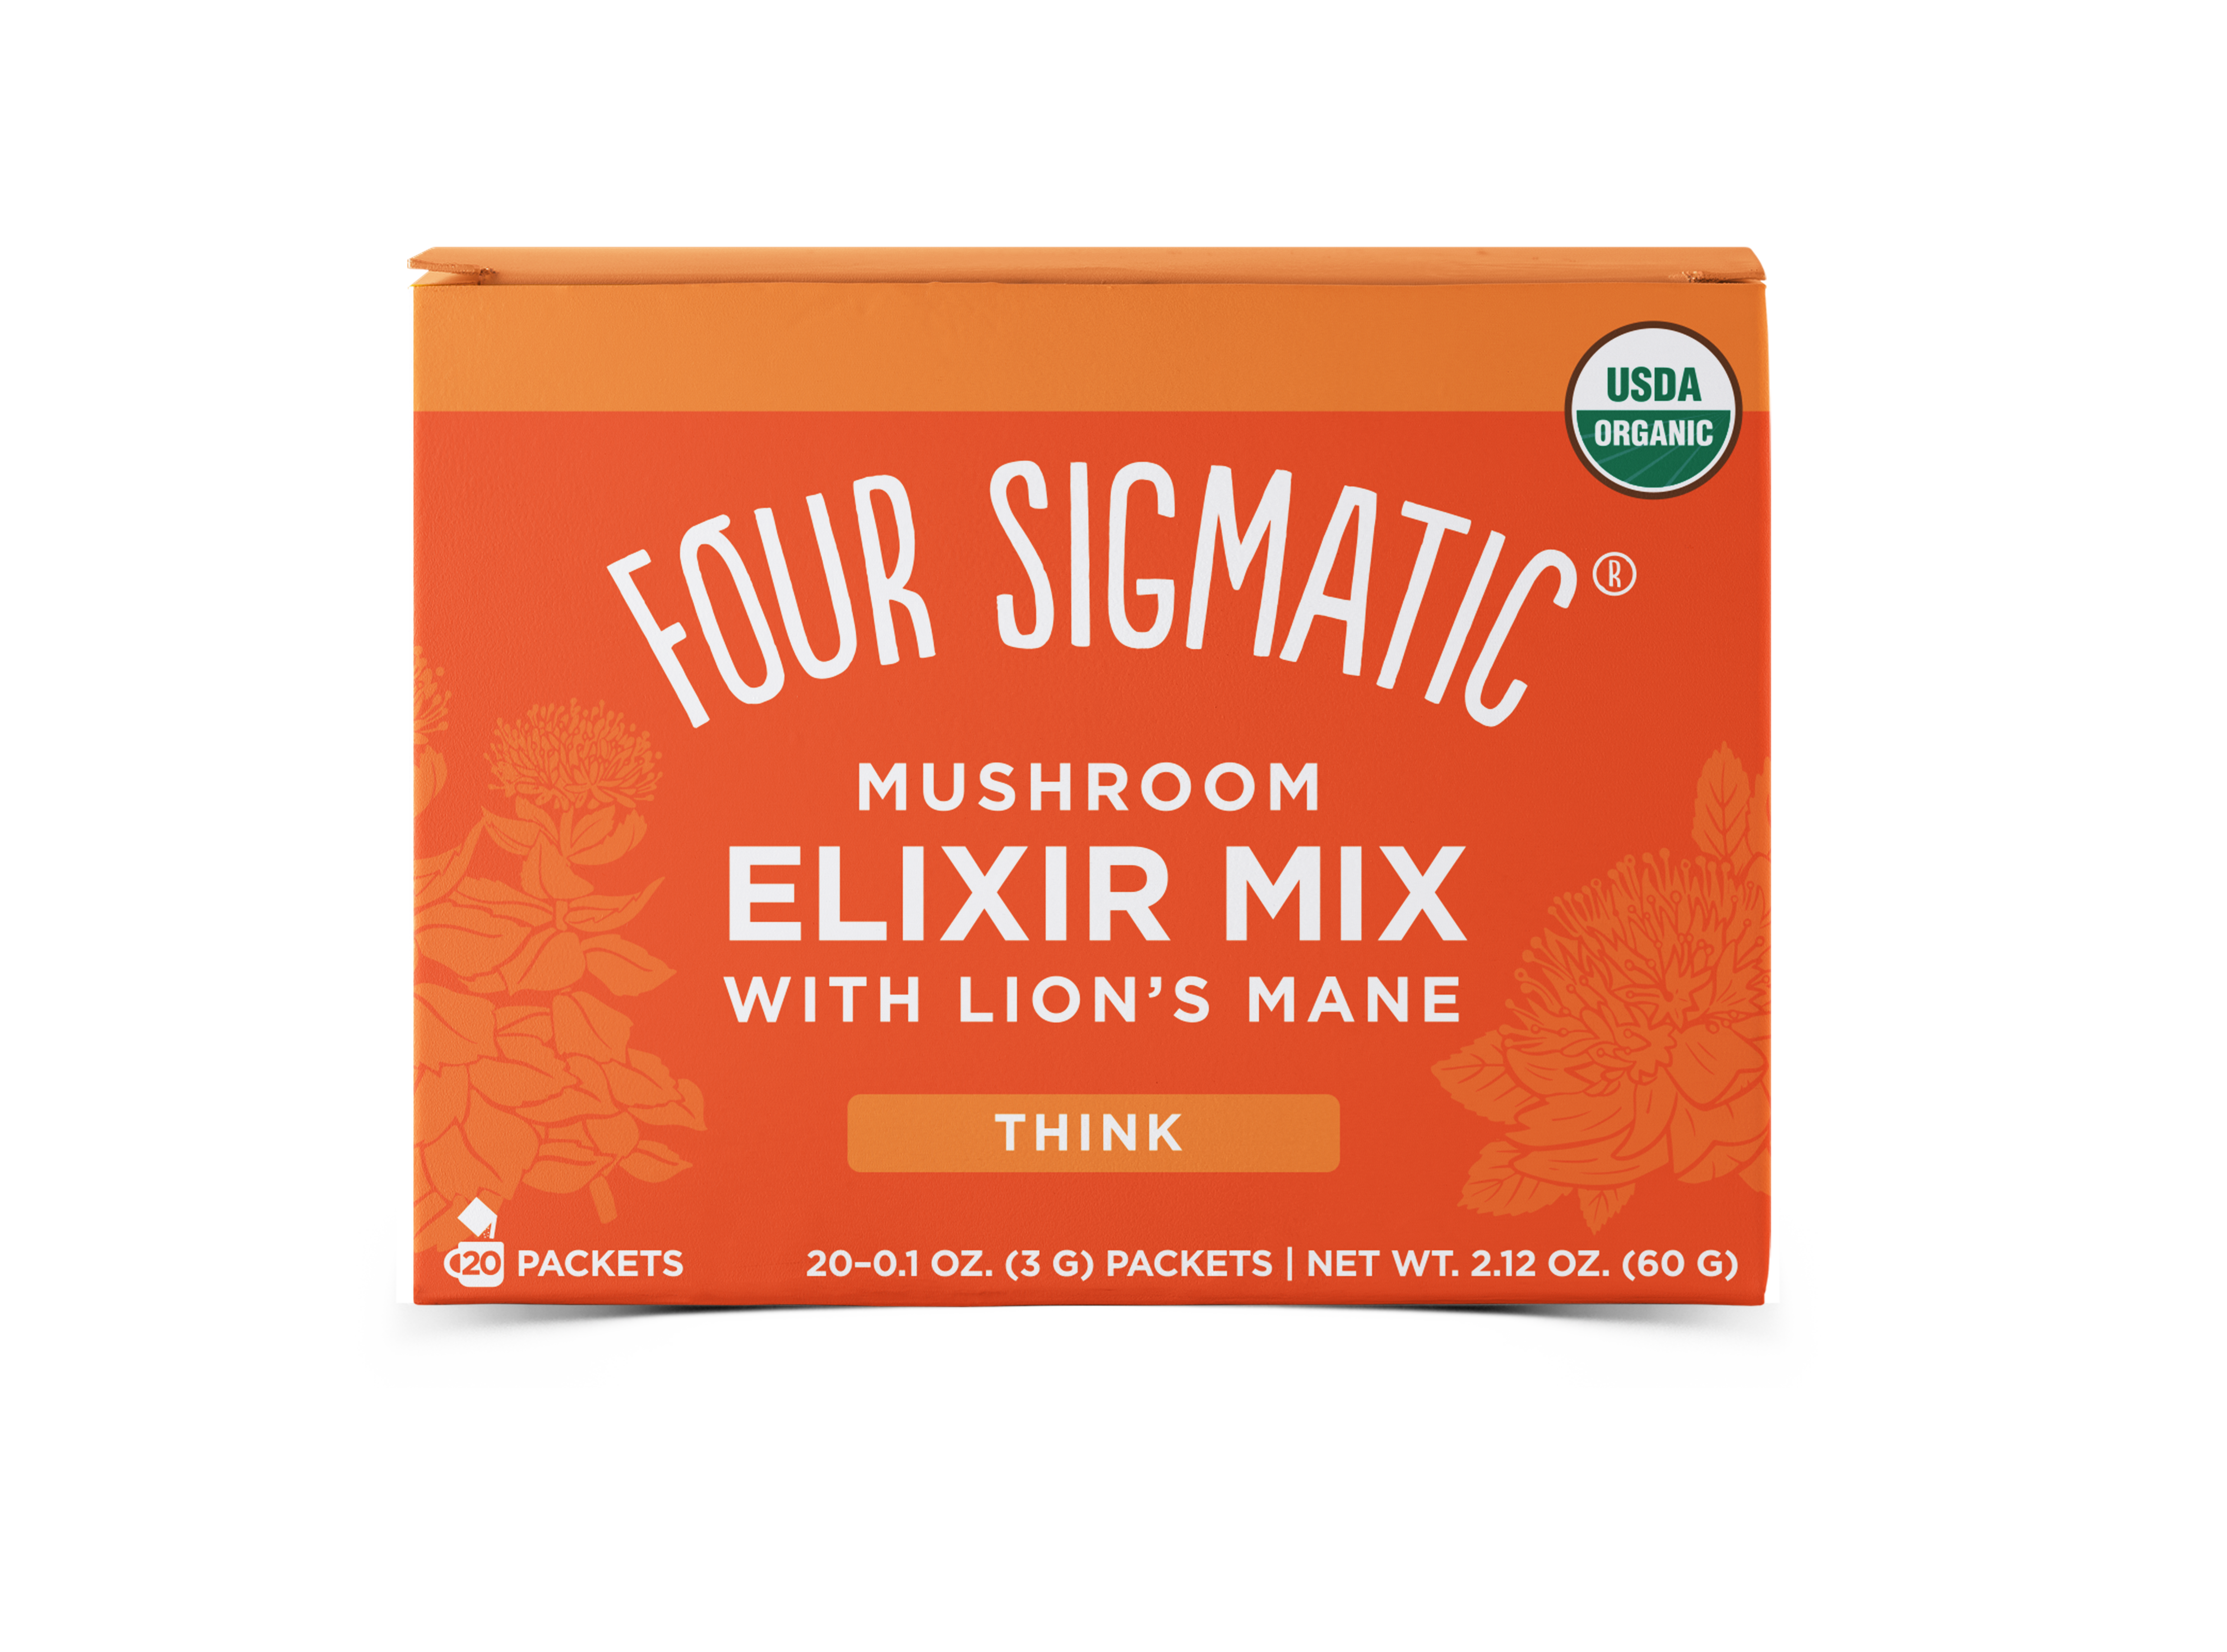 Four Sigmatic Mushroom Elixir Mix with Lion's Mane 20ct Box 144 units per case 2.2 oz